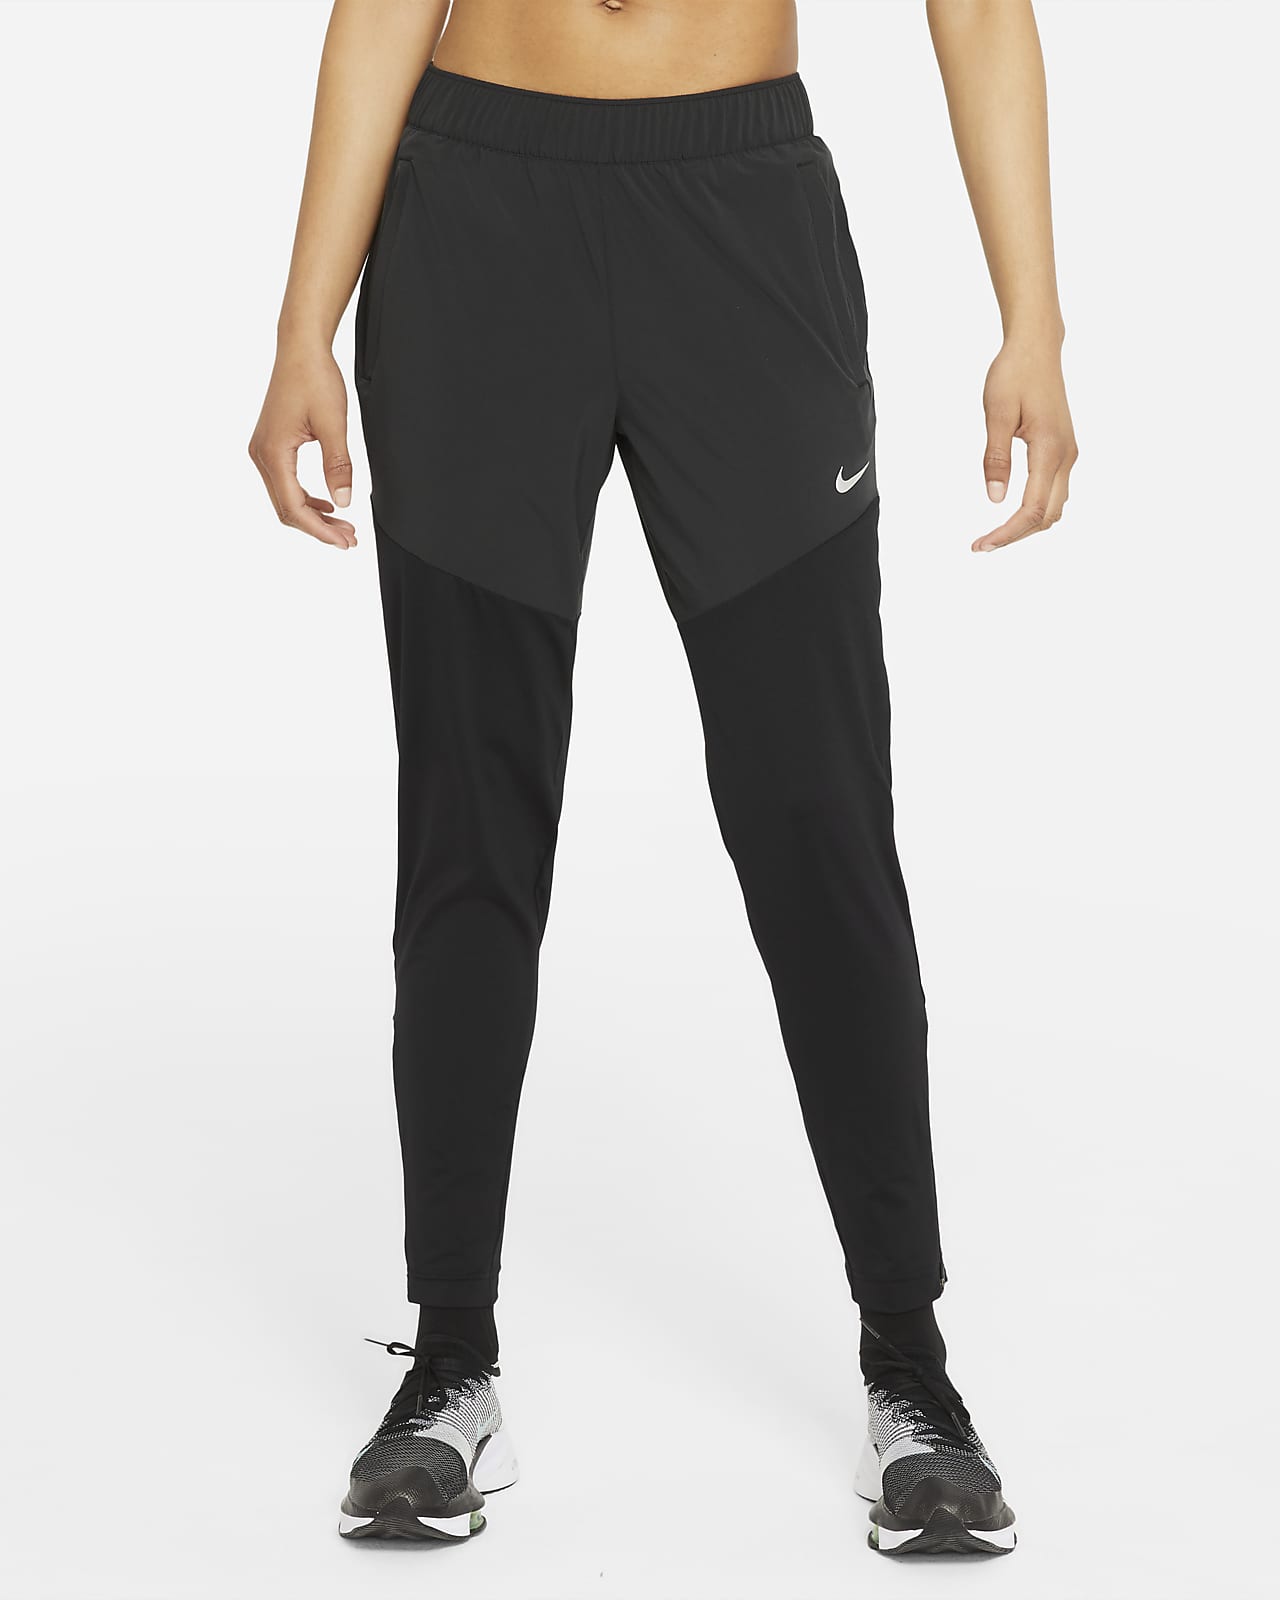 Nike Digital Therma Pant - Women's - Atlantic Sportswear